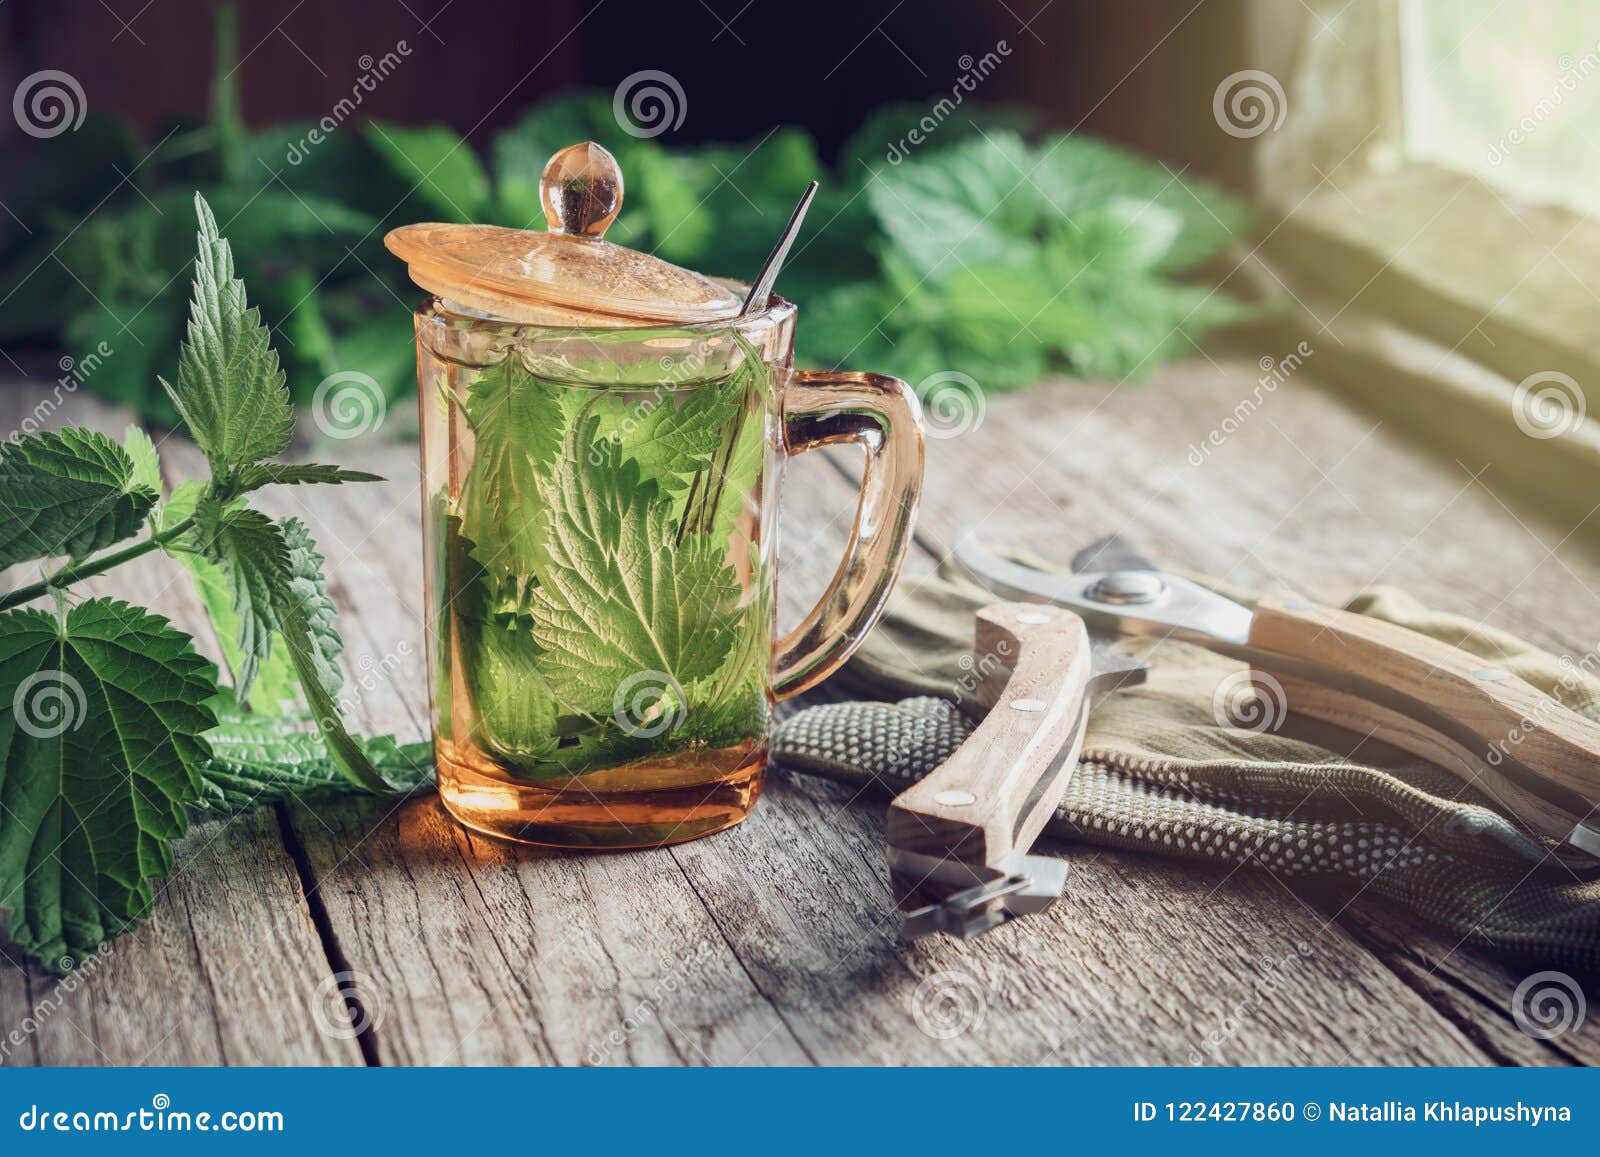 nettle tea or infusion, nettle plants and garden pruner on wooden table.